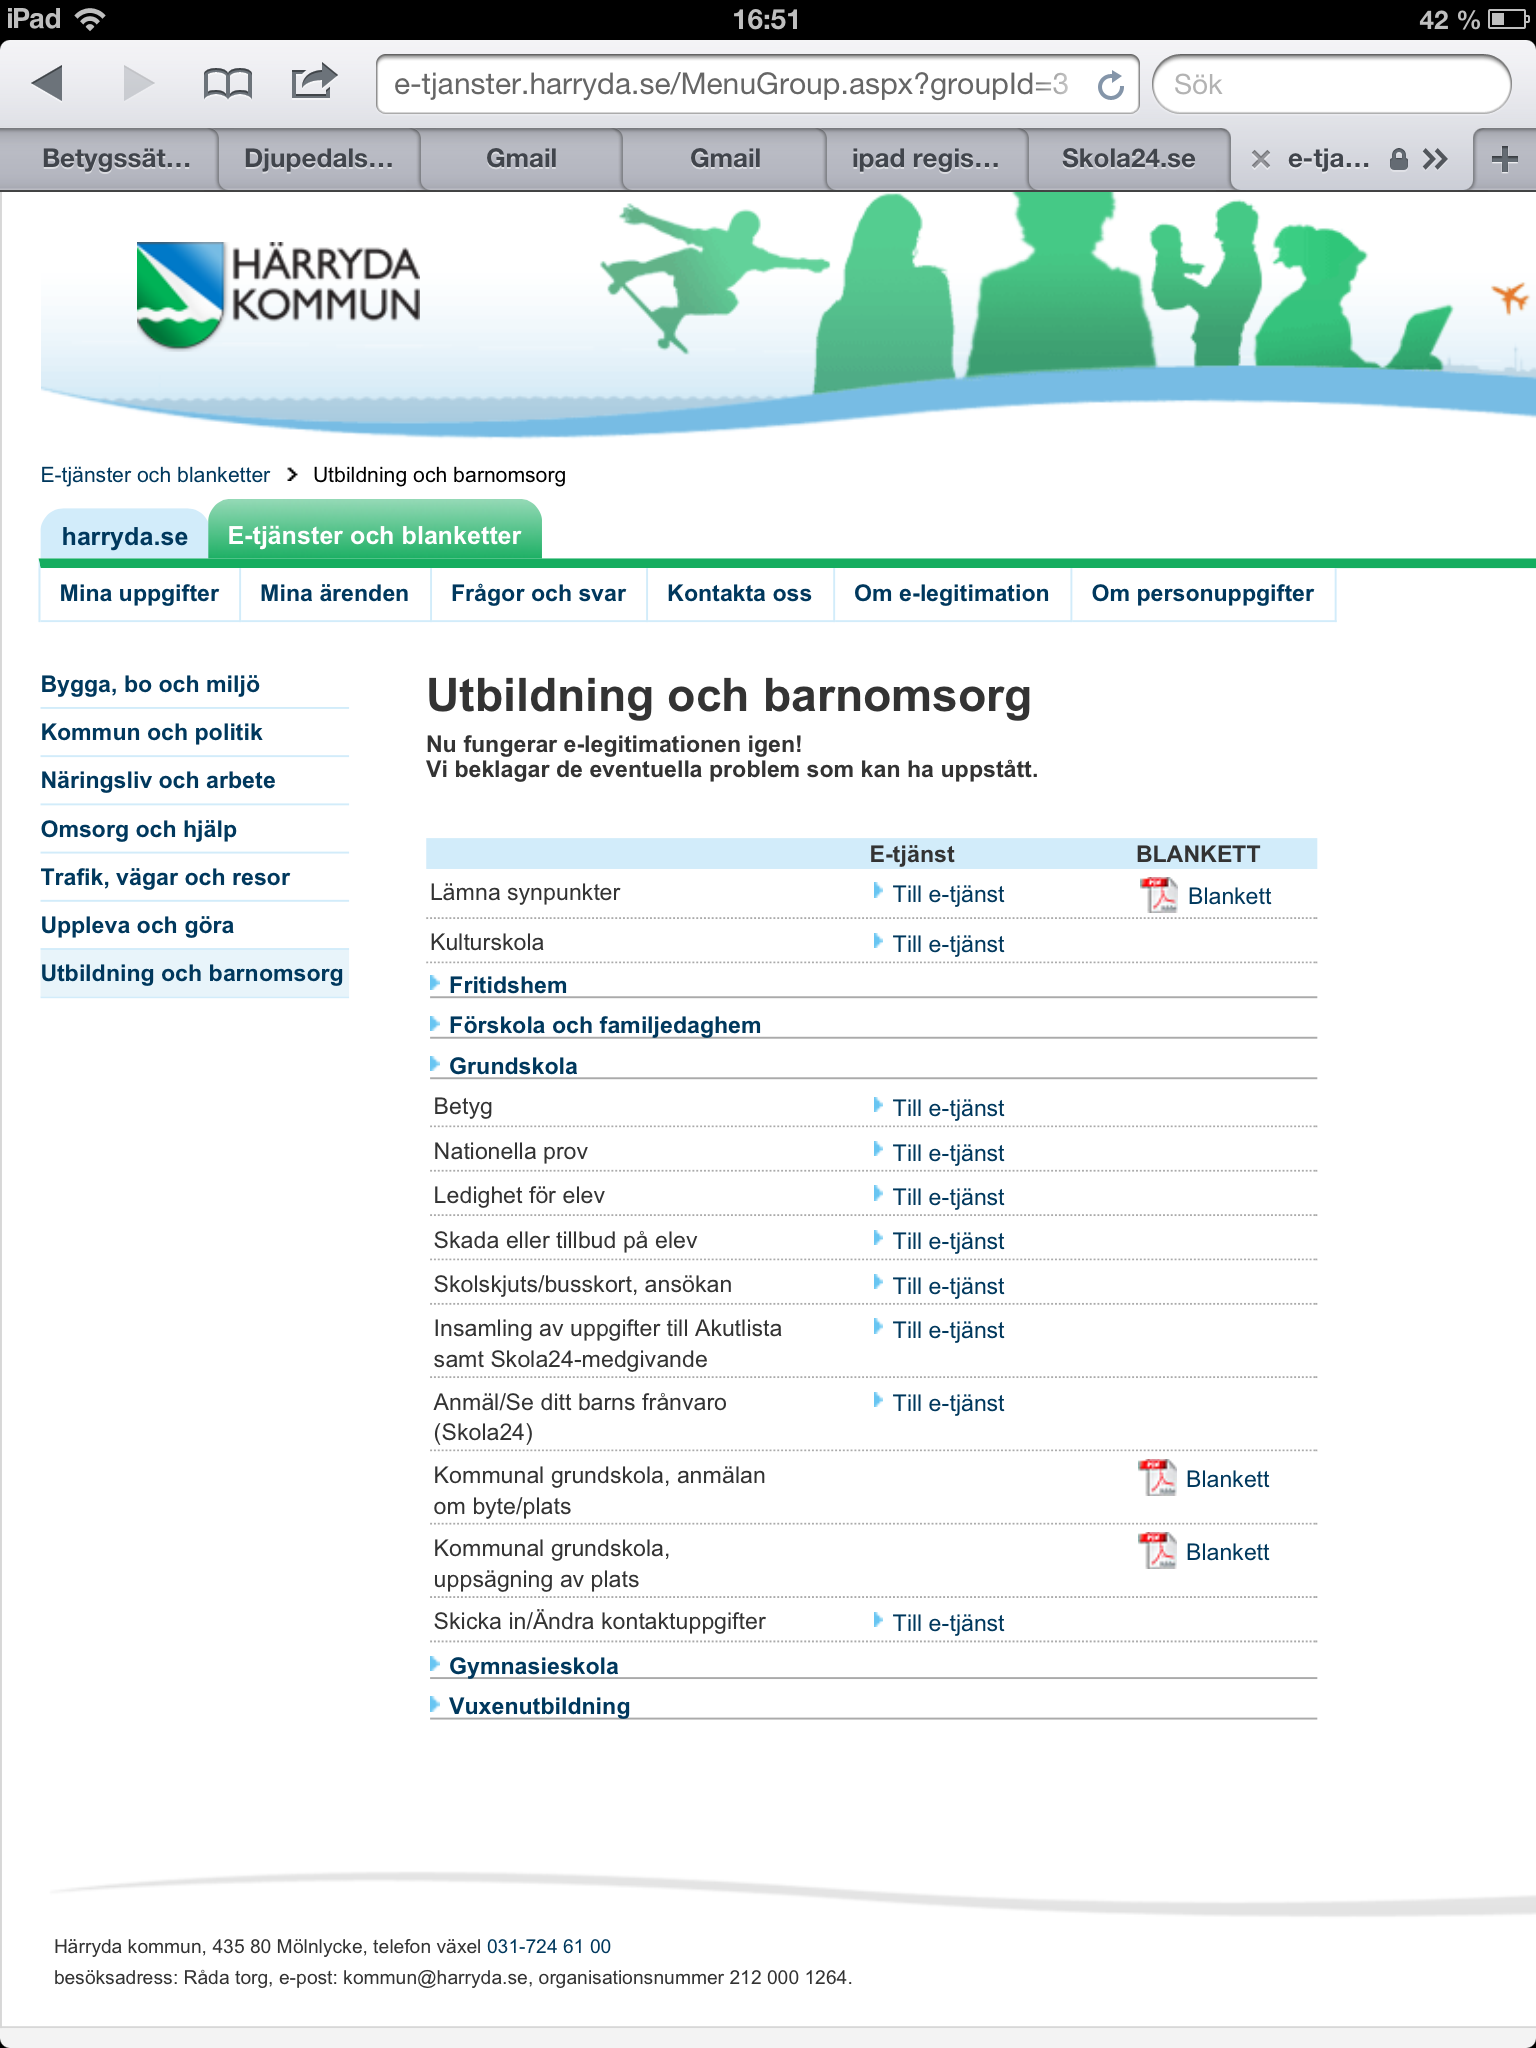 E-tjänster Ledighet, skolskjuts, skola24 Kommunens hemsida